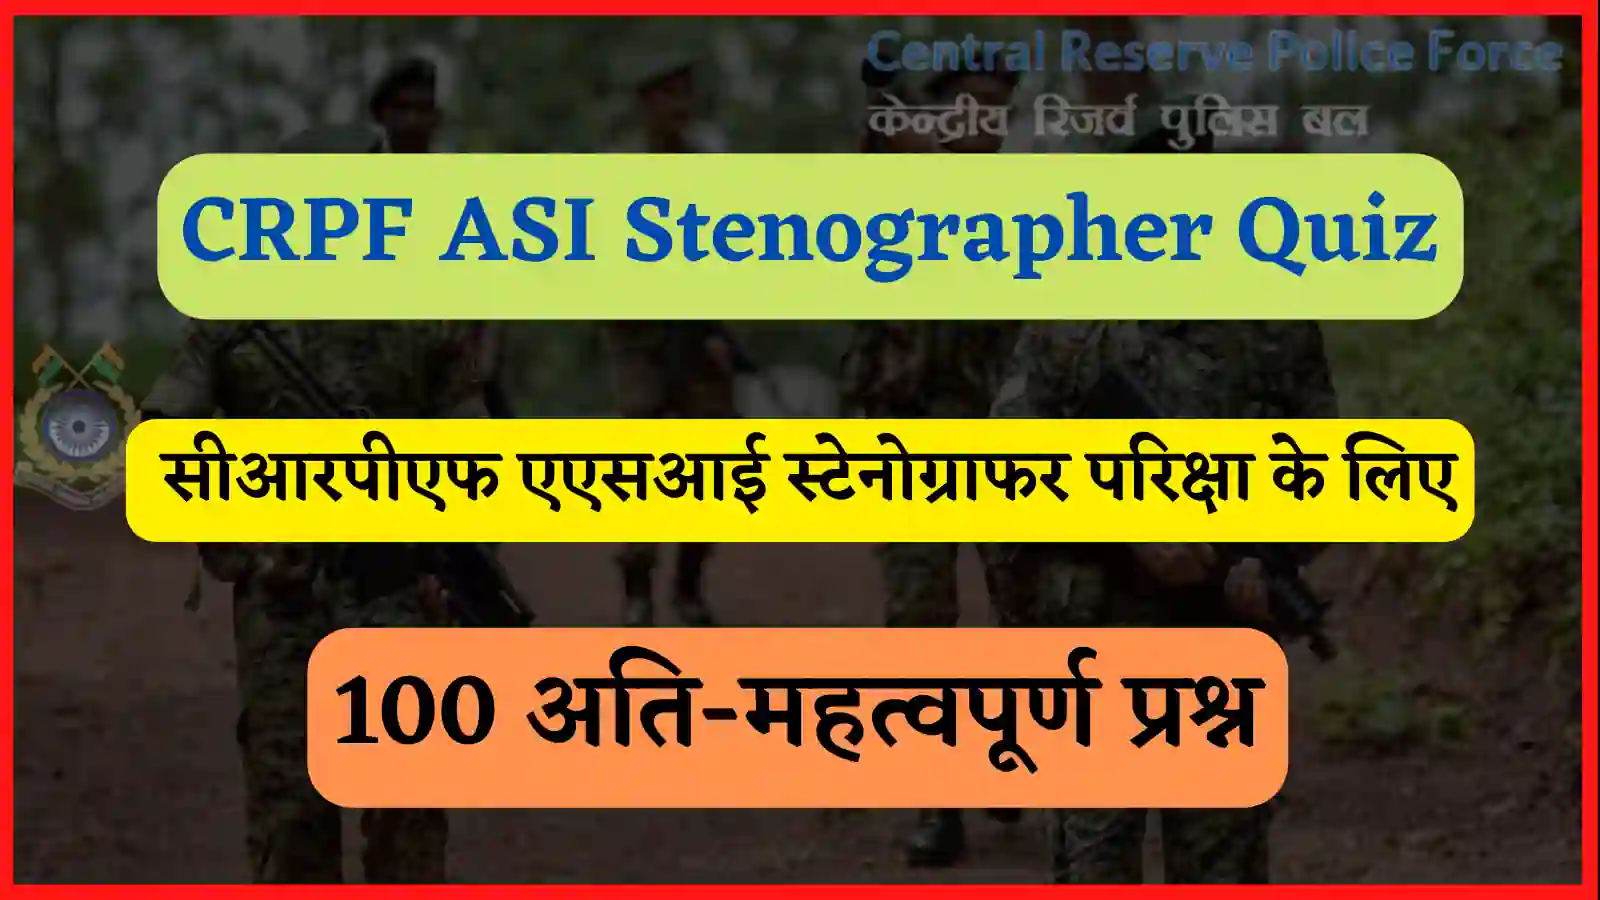 CRPF ASI Stenographer Quiz in Hindi